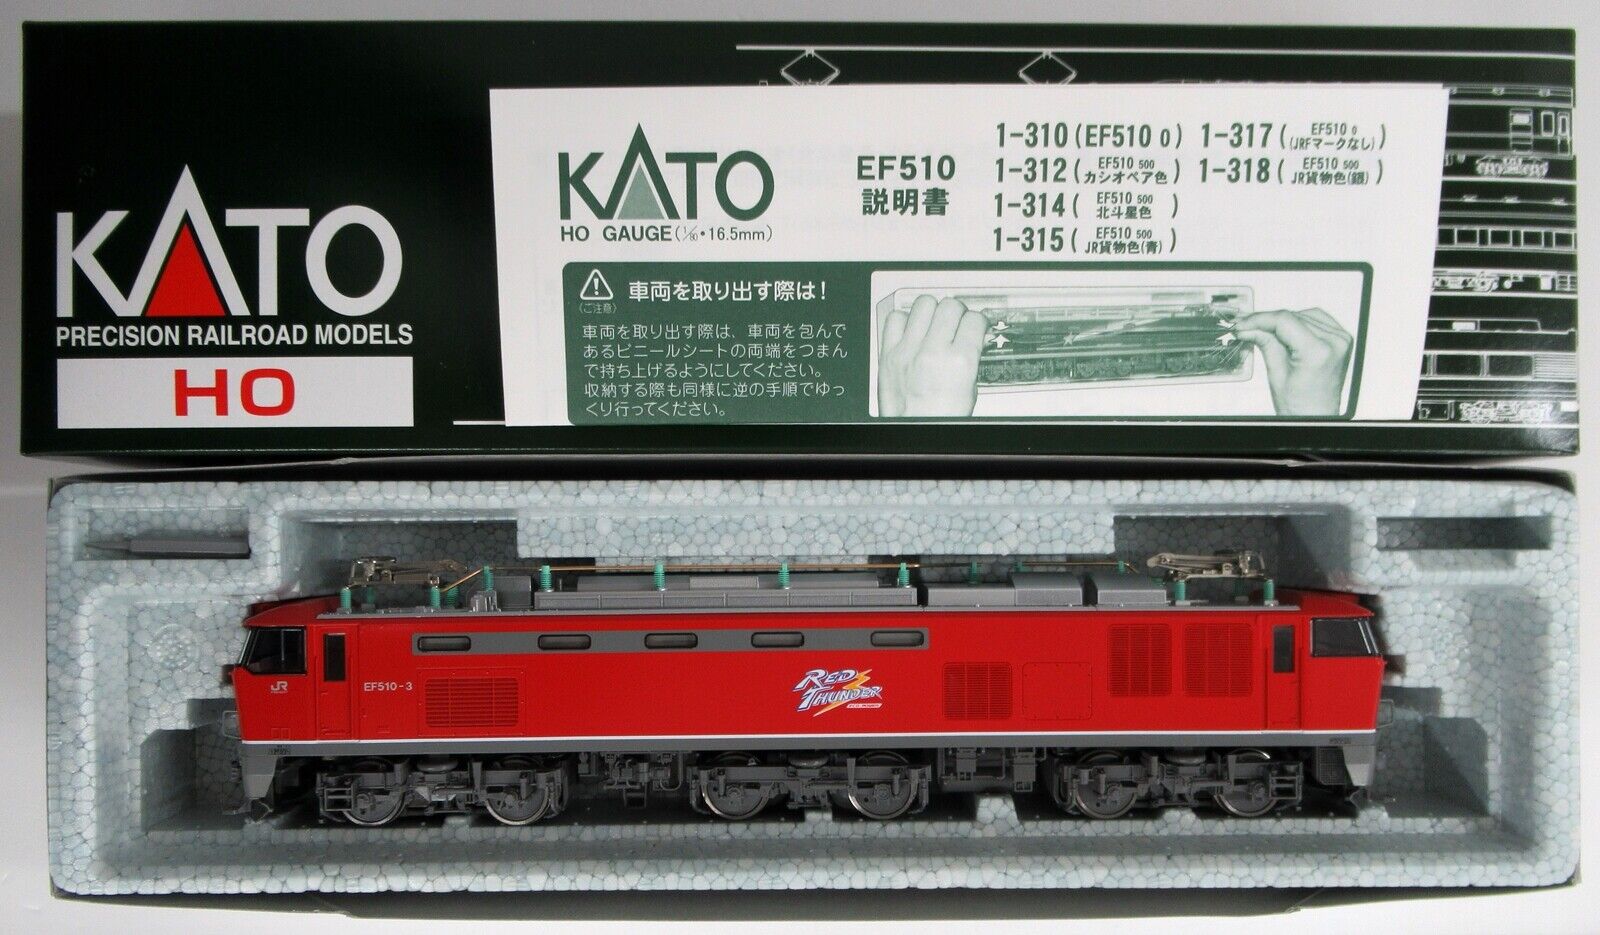 Ho Gauge Kato 1-317 Ef510-0 No Jrf Mark A 0617-124